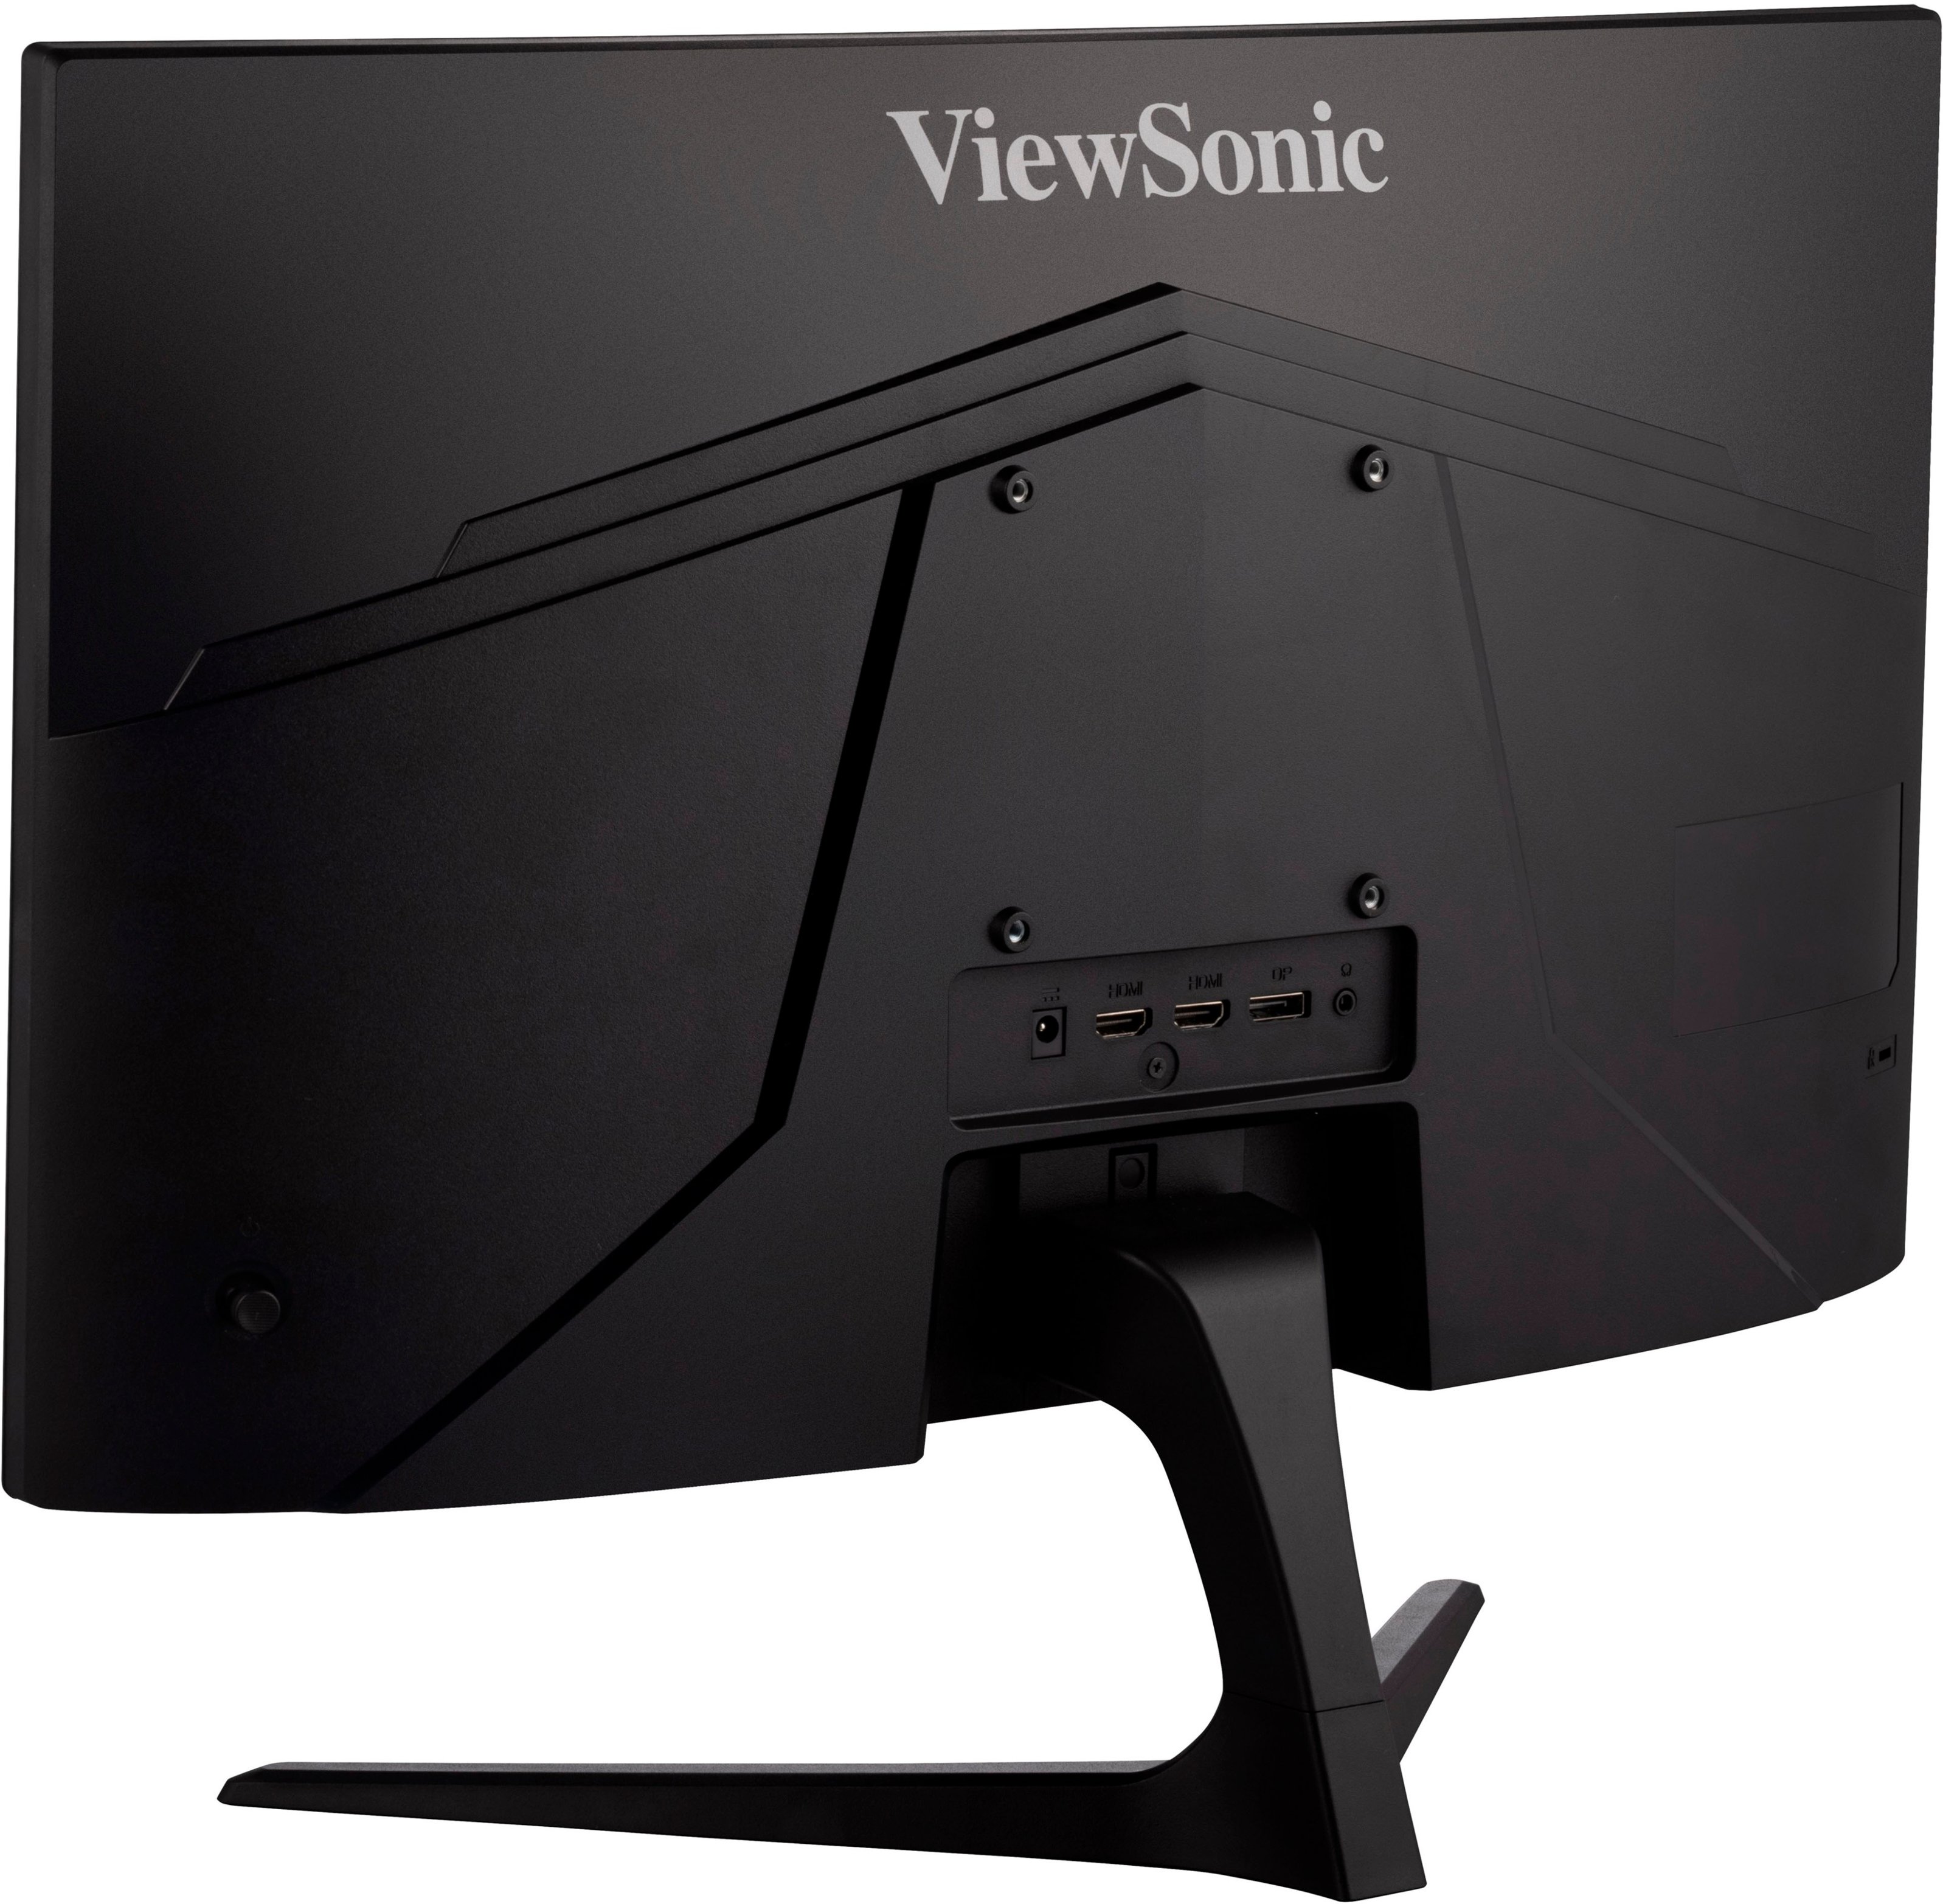 Angle View: ViewSonic - OMNI VX2418C 24" LCD FHD FreeSync Curved Gaming Monitor (HDMI and DisplayPort) - Black